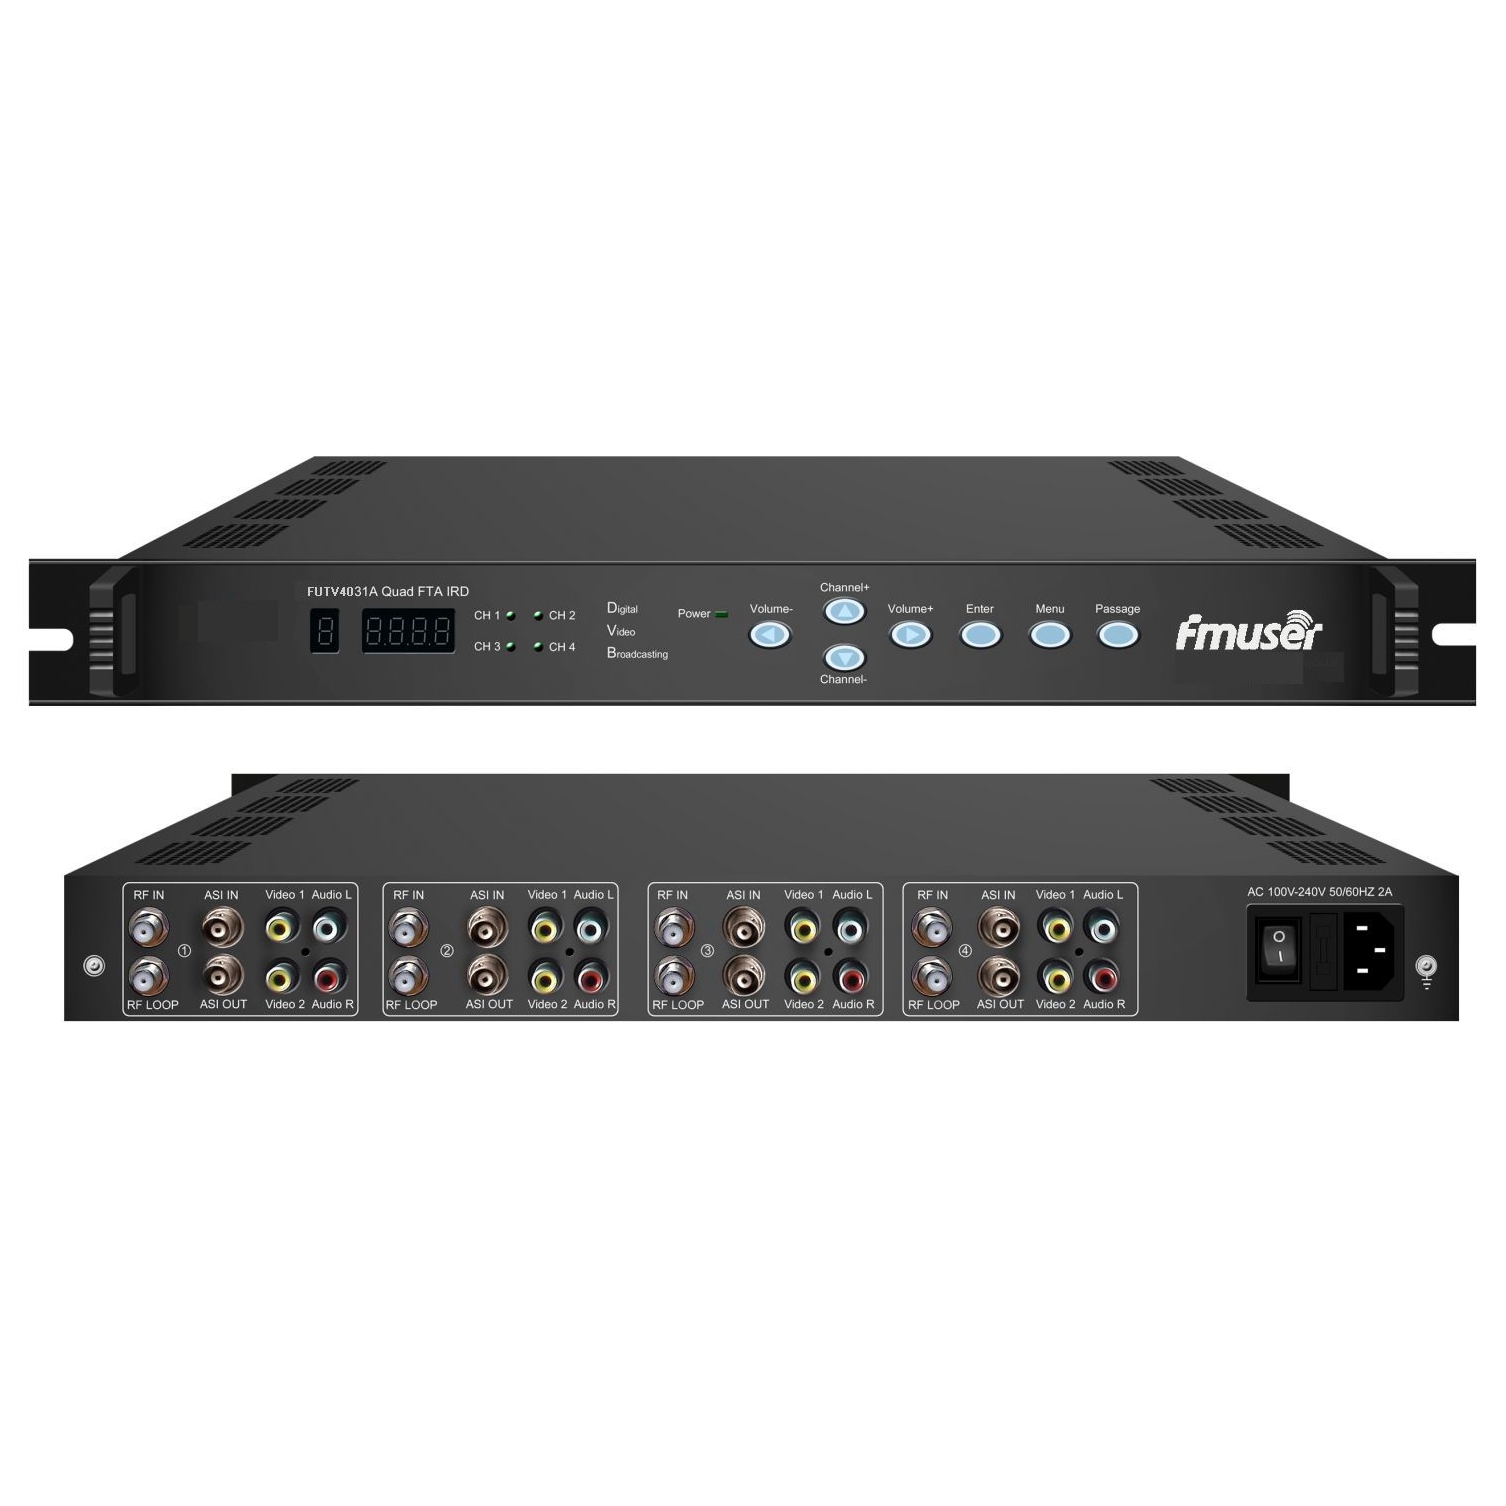 FMUSER FUTV4031A Quad FTA IRD სატელიტური მიმღები (4 DVB-S RF შეყვანის, ASI In, ASI გამოყვანის, AV Out) ერთად Demodulating და დეკოდირების